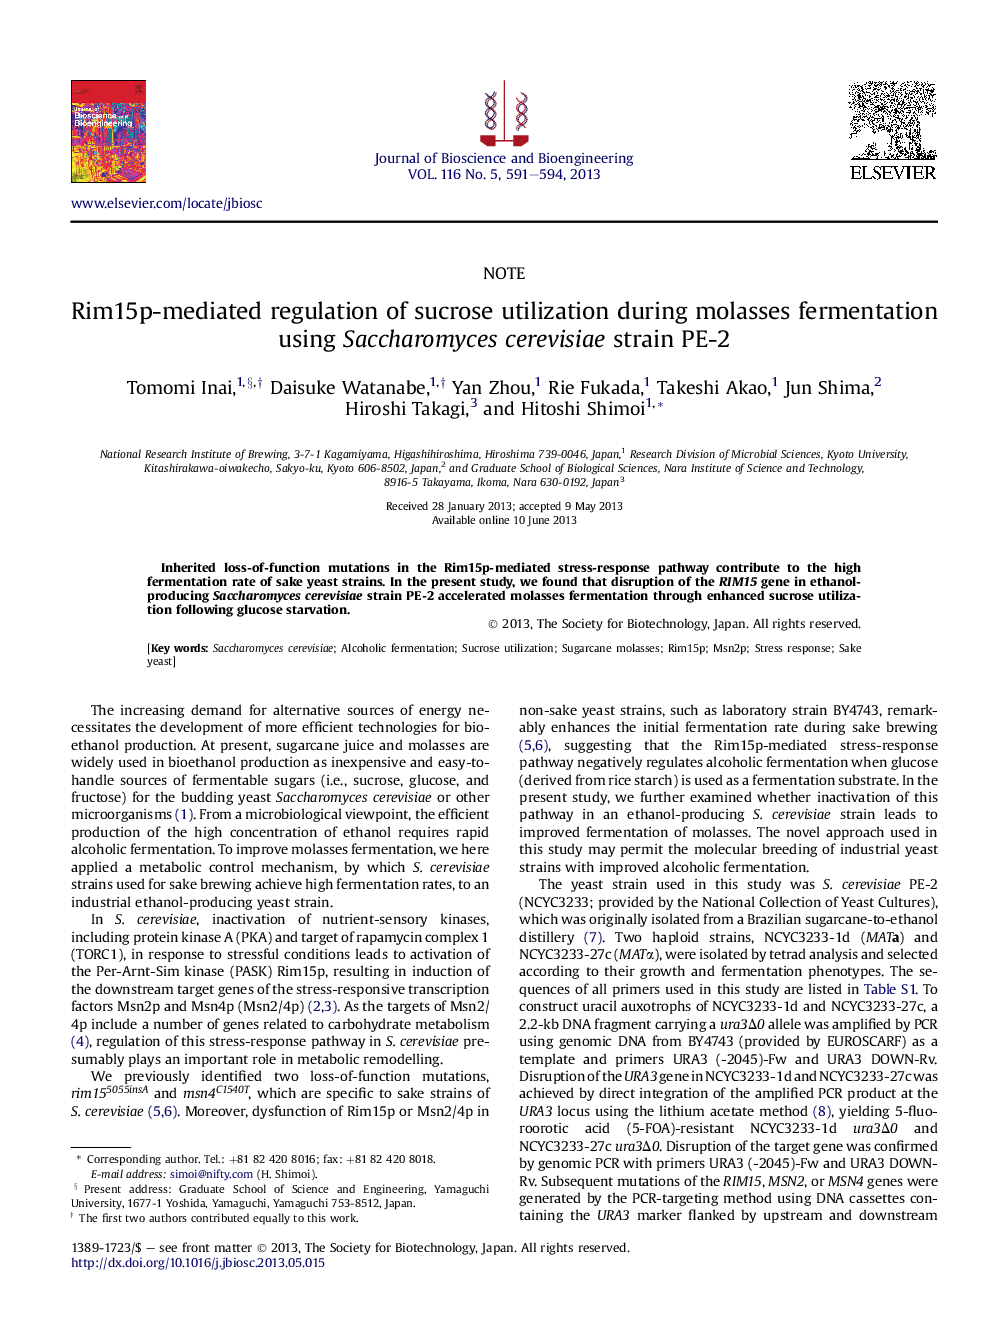 Rim15p-mediated regulation of sucrose utilization during molasses fermentation using Saccharomyces cerevisiae strain PE-2